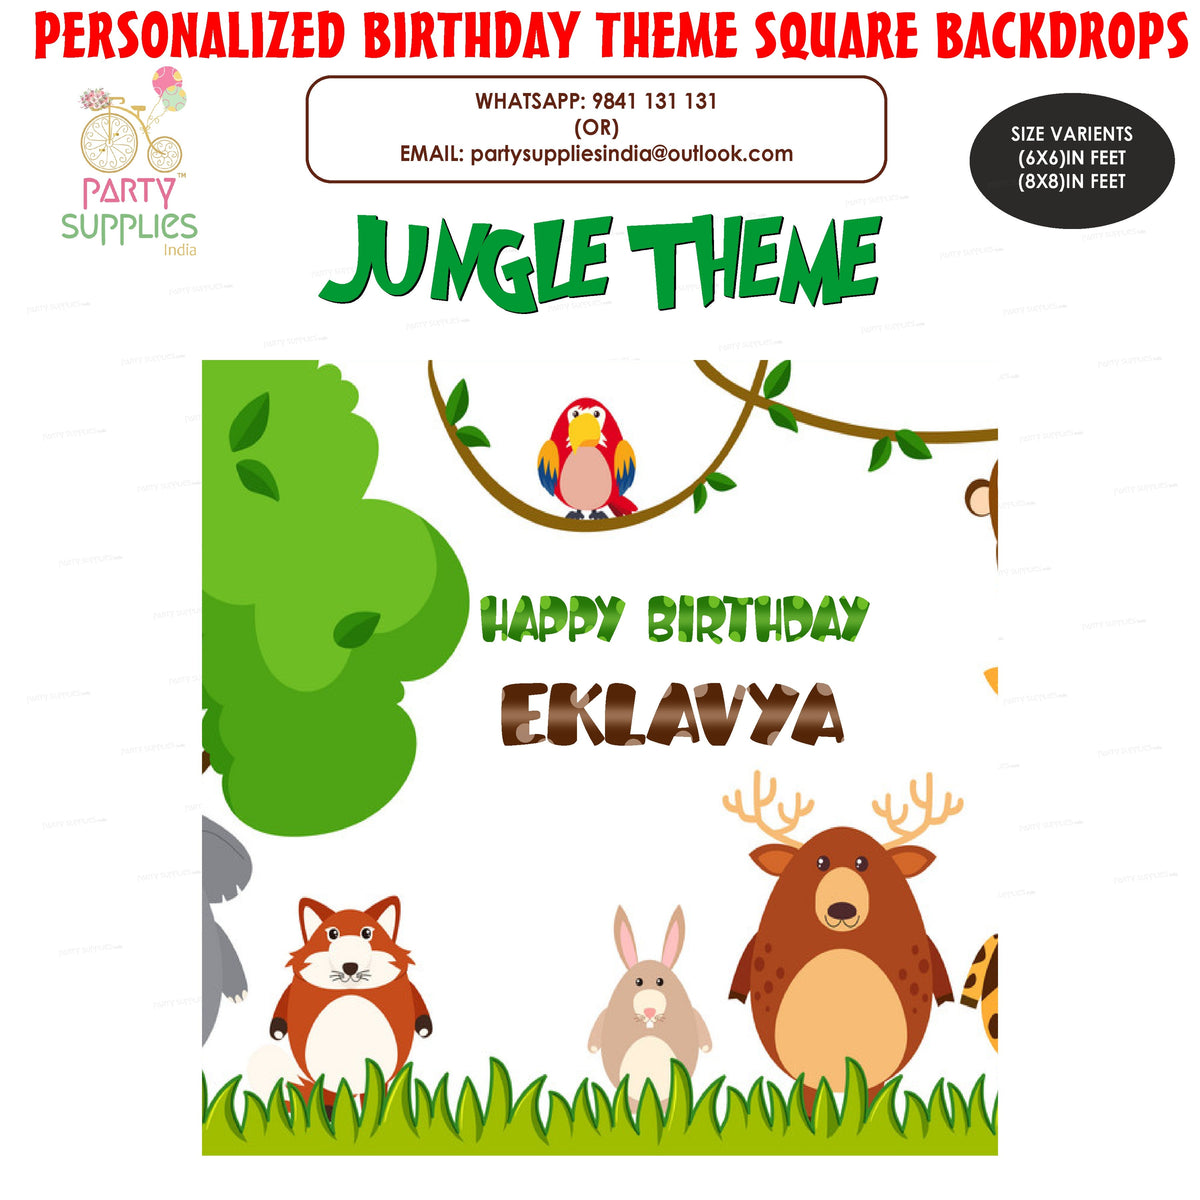 Jungle Theme Customized Square Backdrop